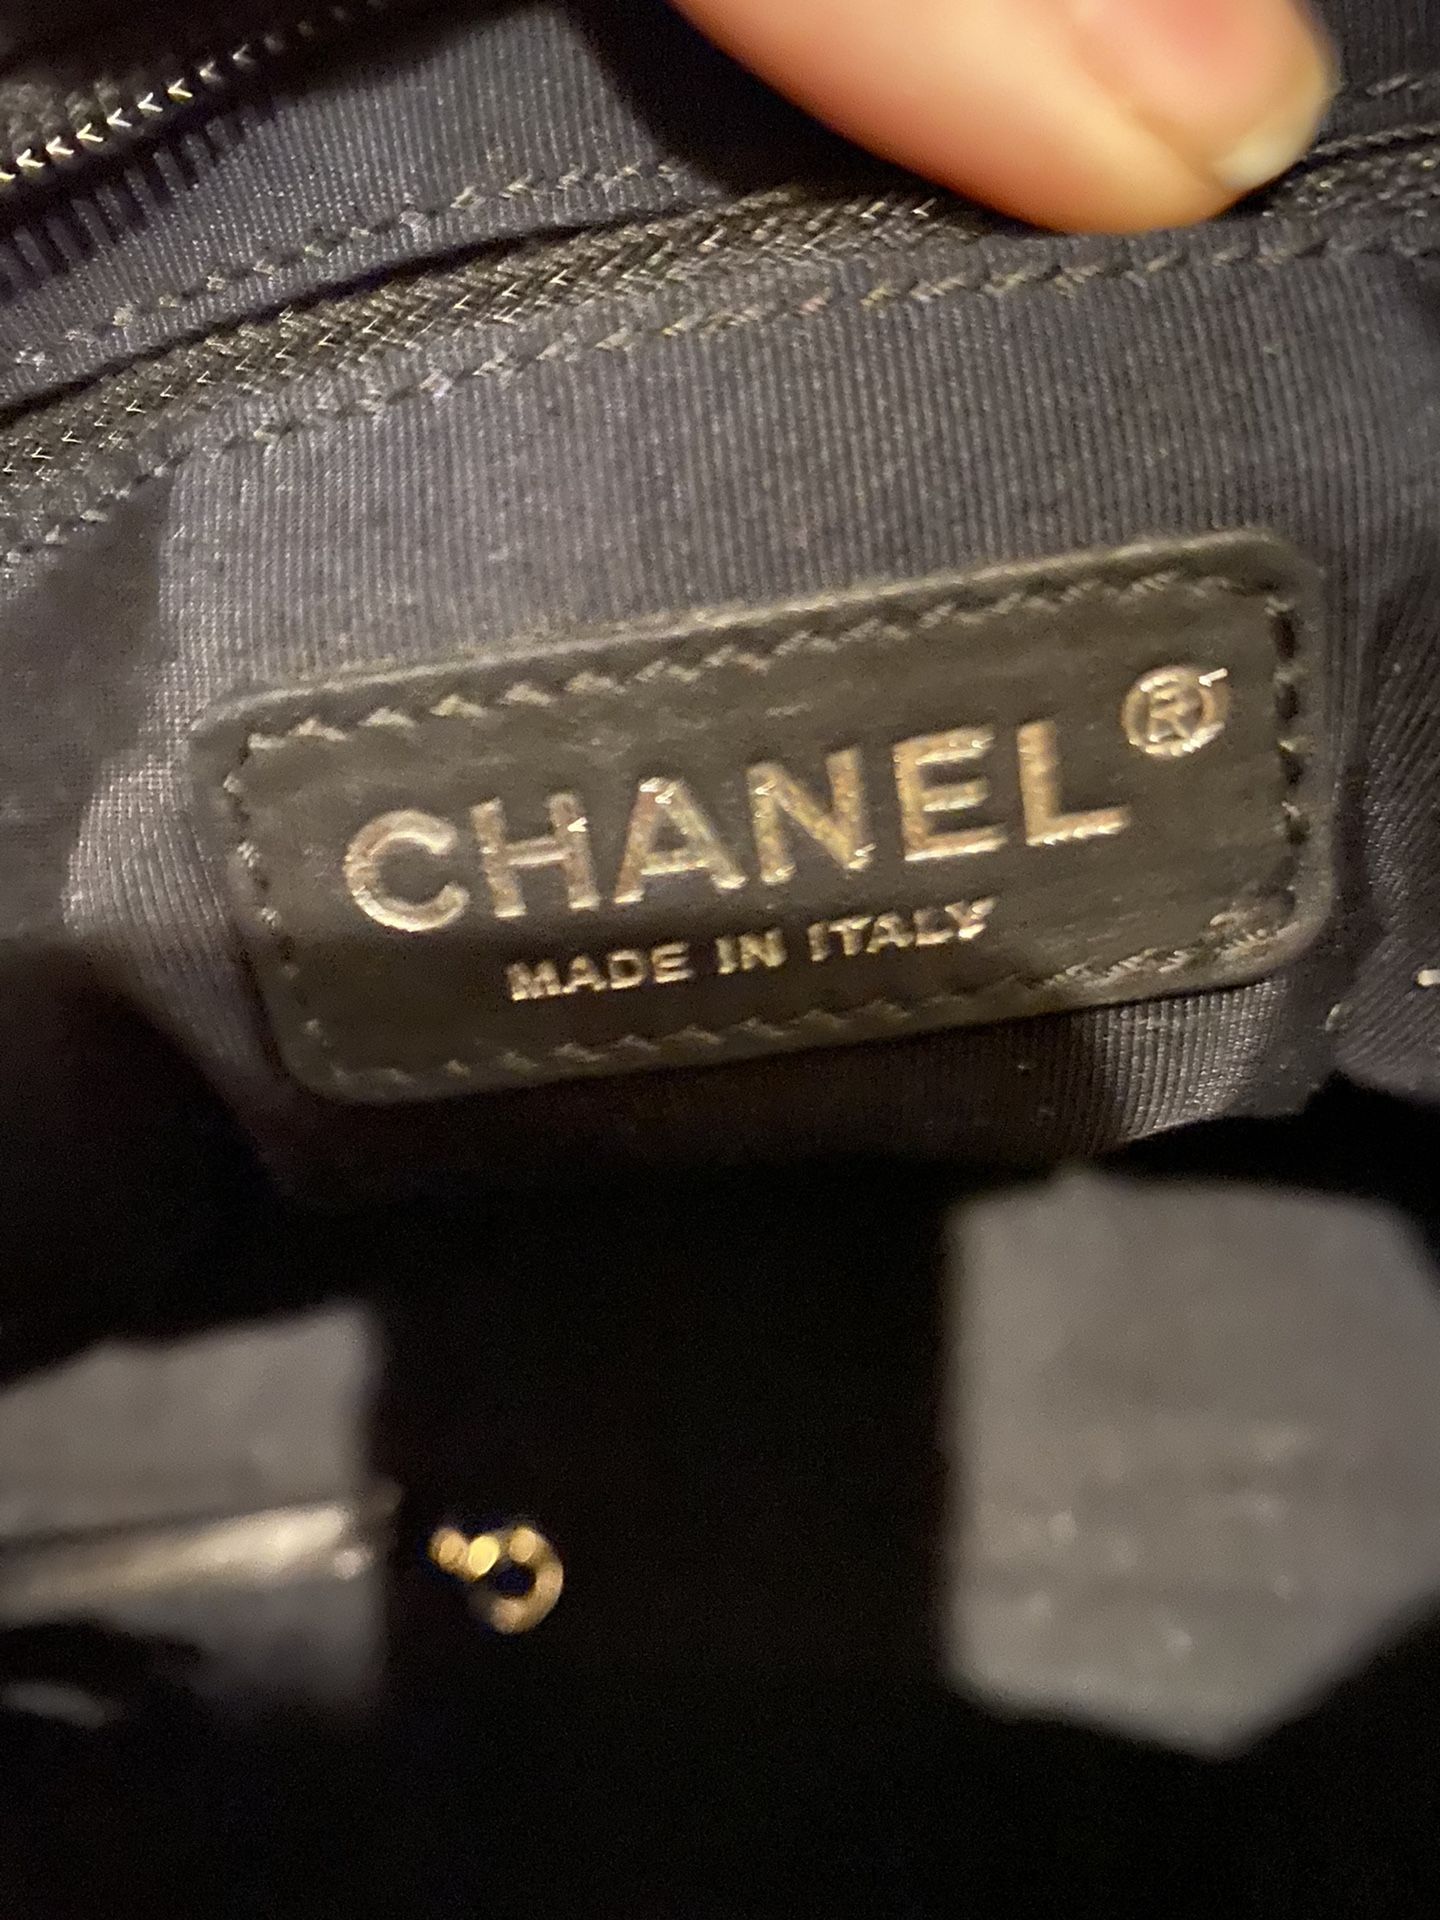 authentic Chanel bag , medium size very roomy. Black,on black  